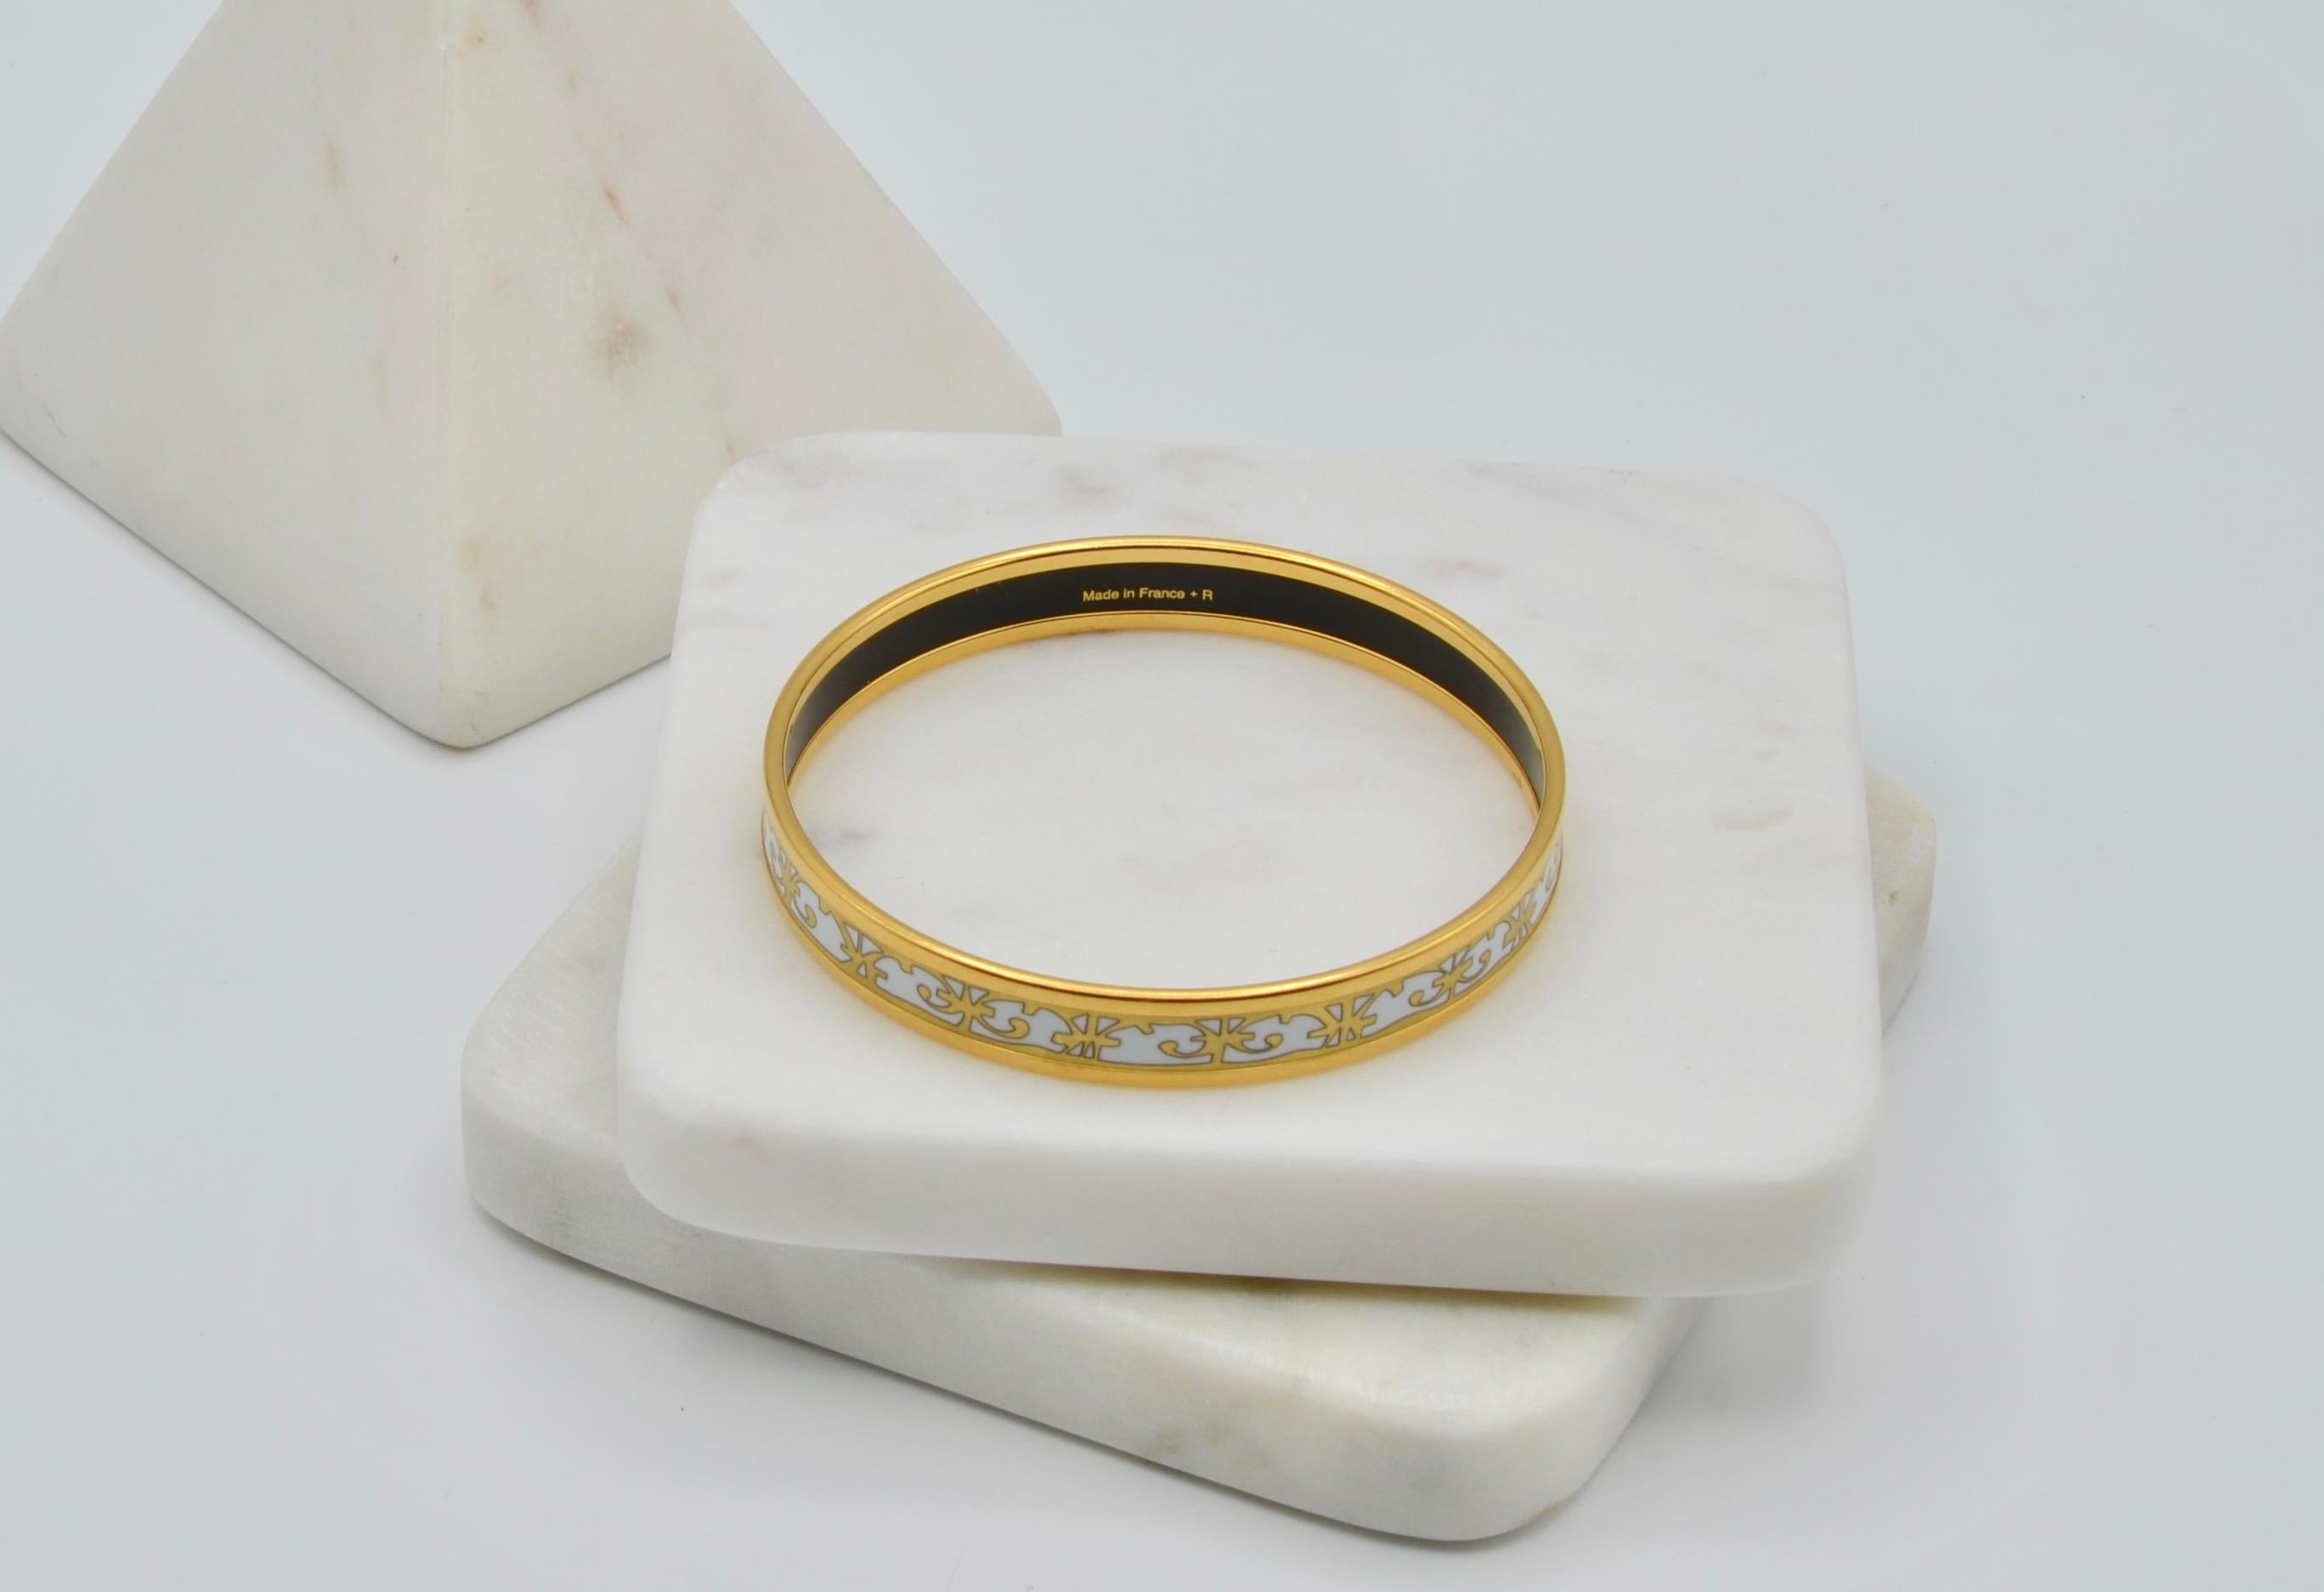 Hermes Paris Balcons du Guadalquivir enamel bangle bracelet in white and gold enamel, this wide statement is 3/8